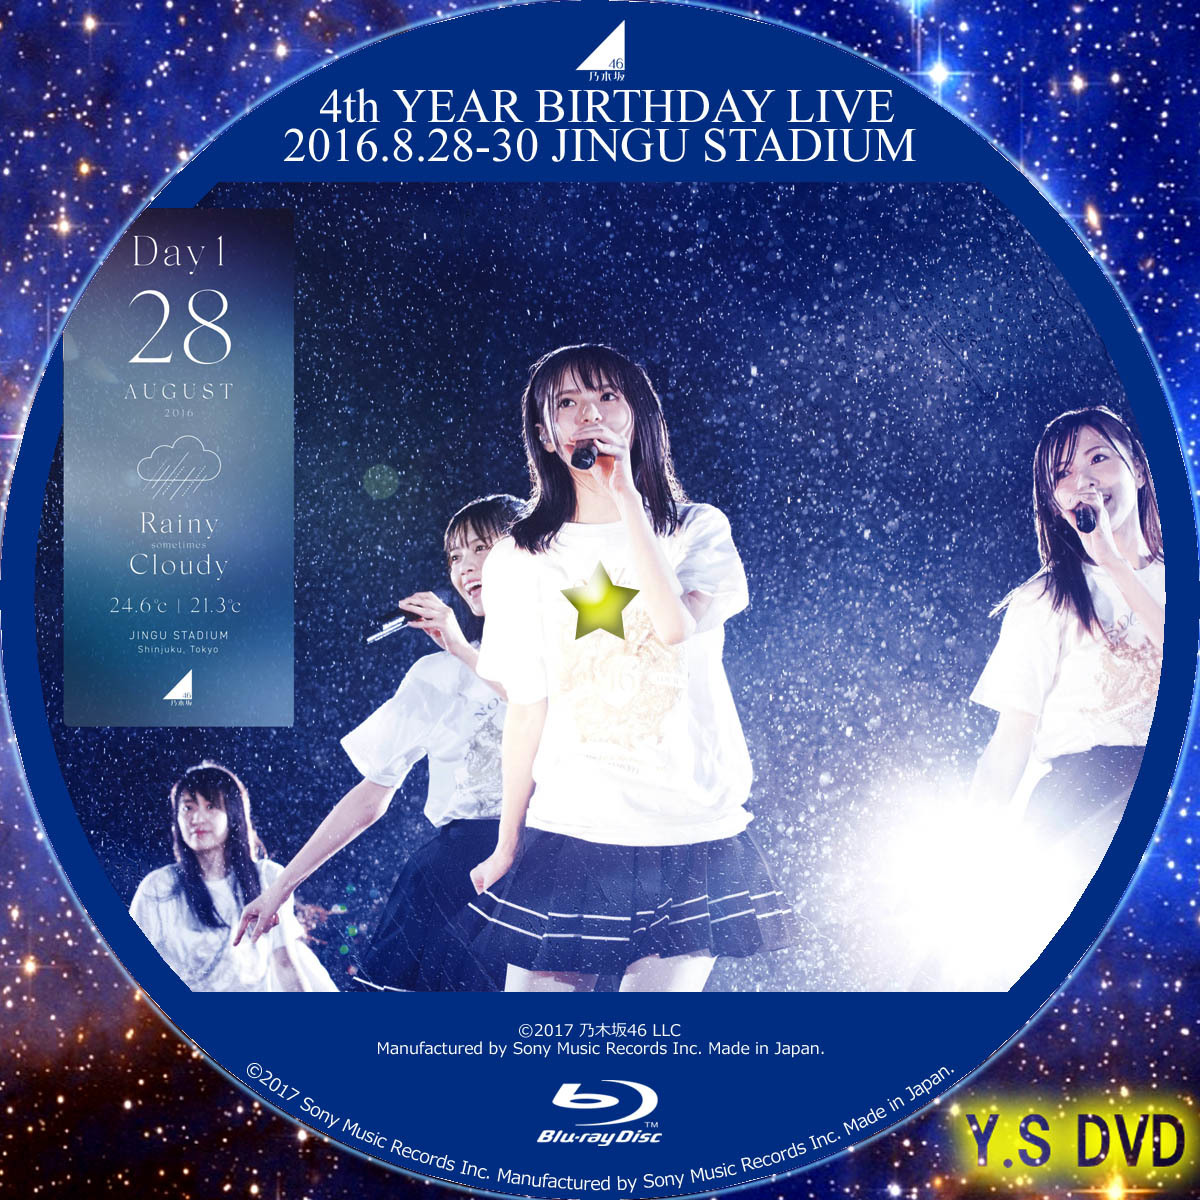 乃木坂46 4th YEAR BIRTHDAY LIVE DVD-